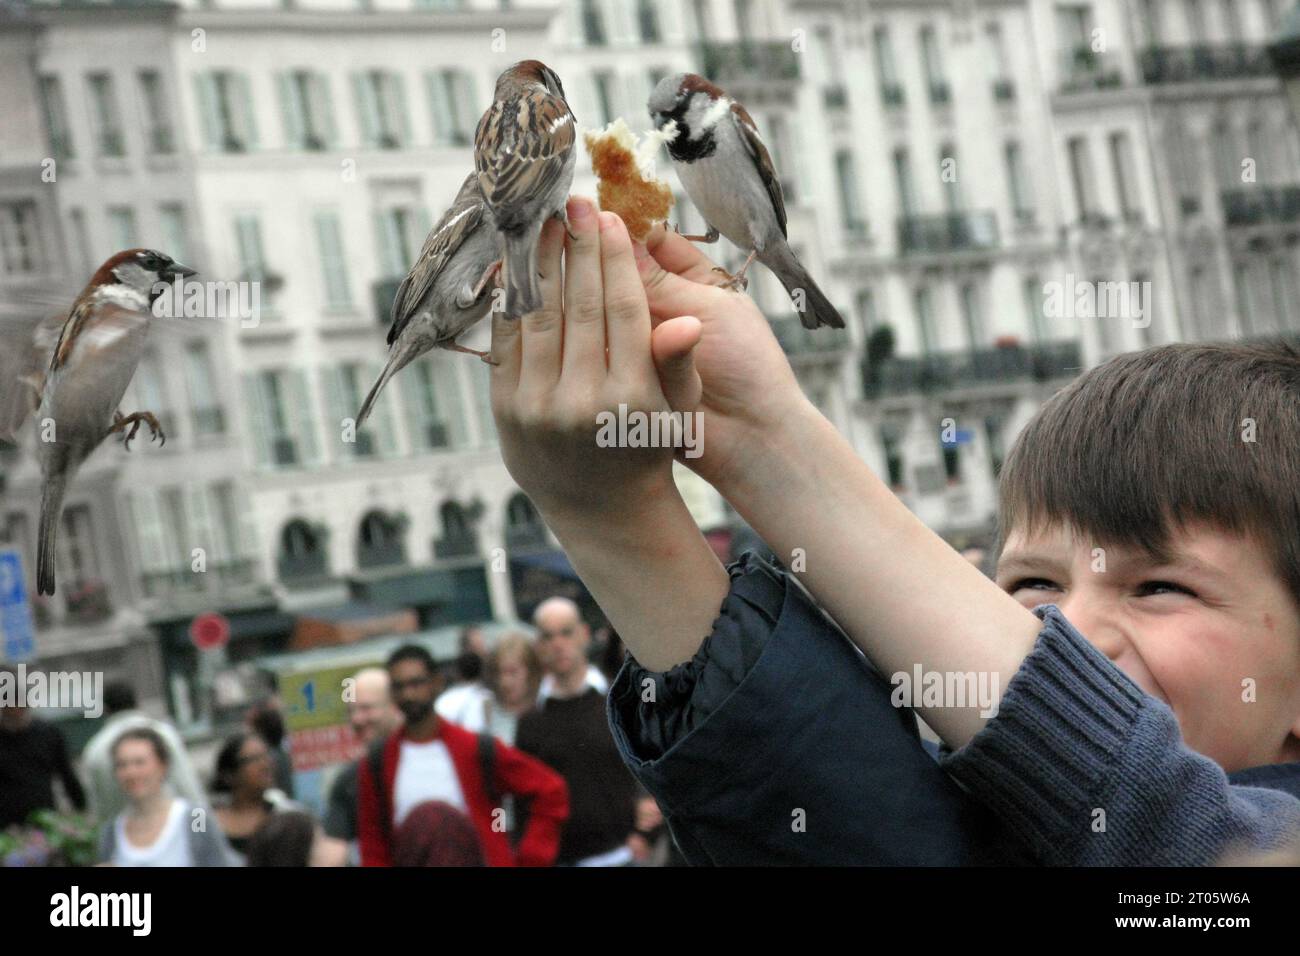 Parijs paris frankrijk france.Little boy feed the births with bread. vvbvanbree Stock Photo